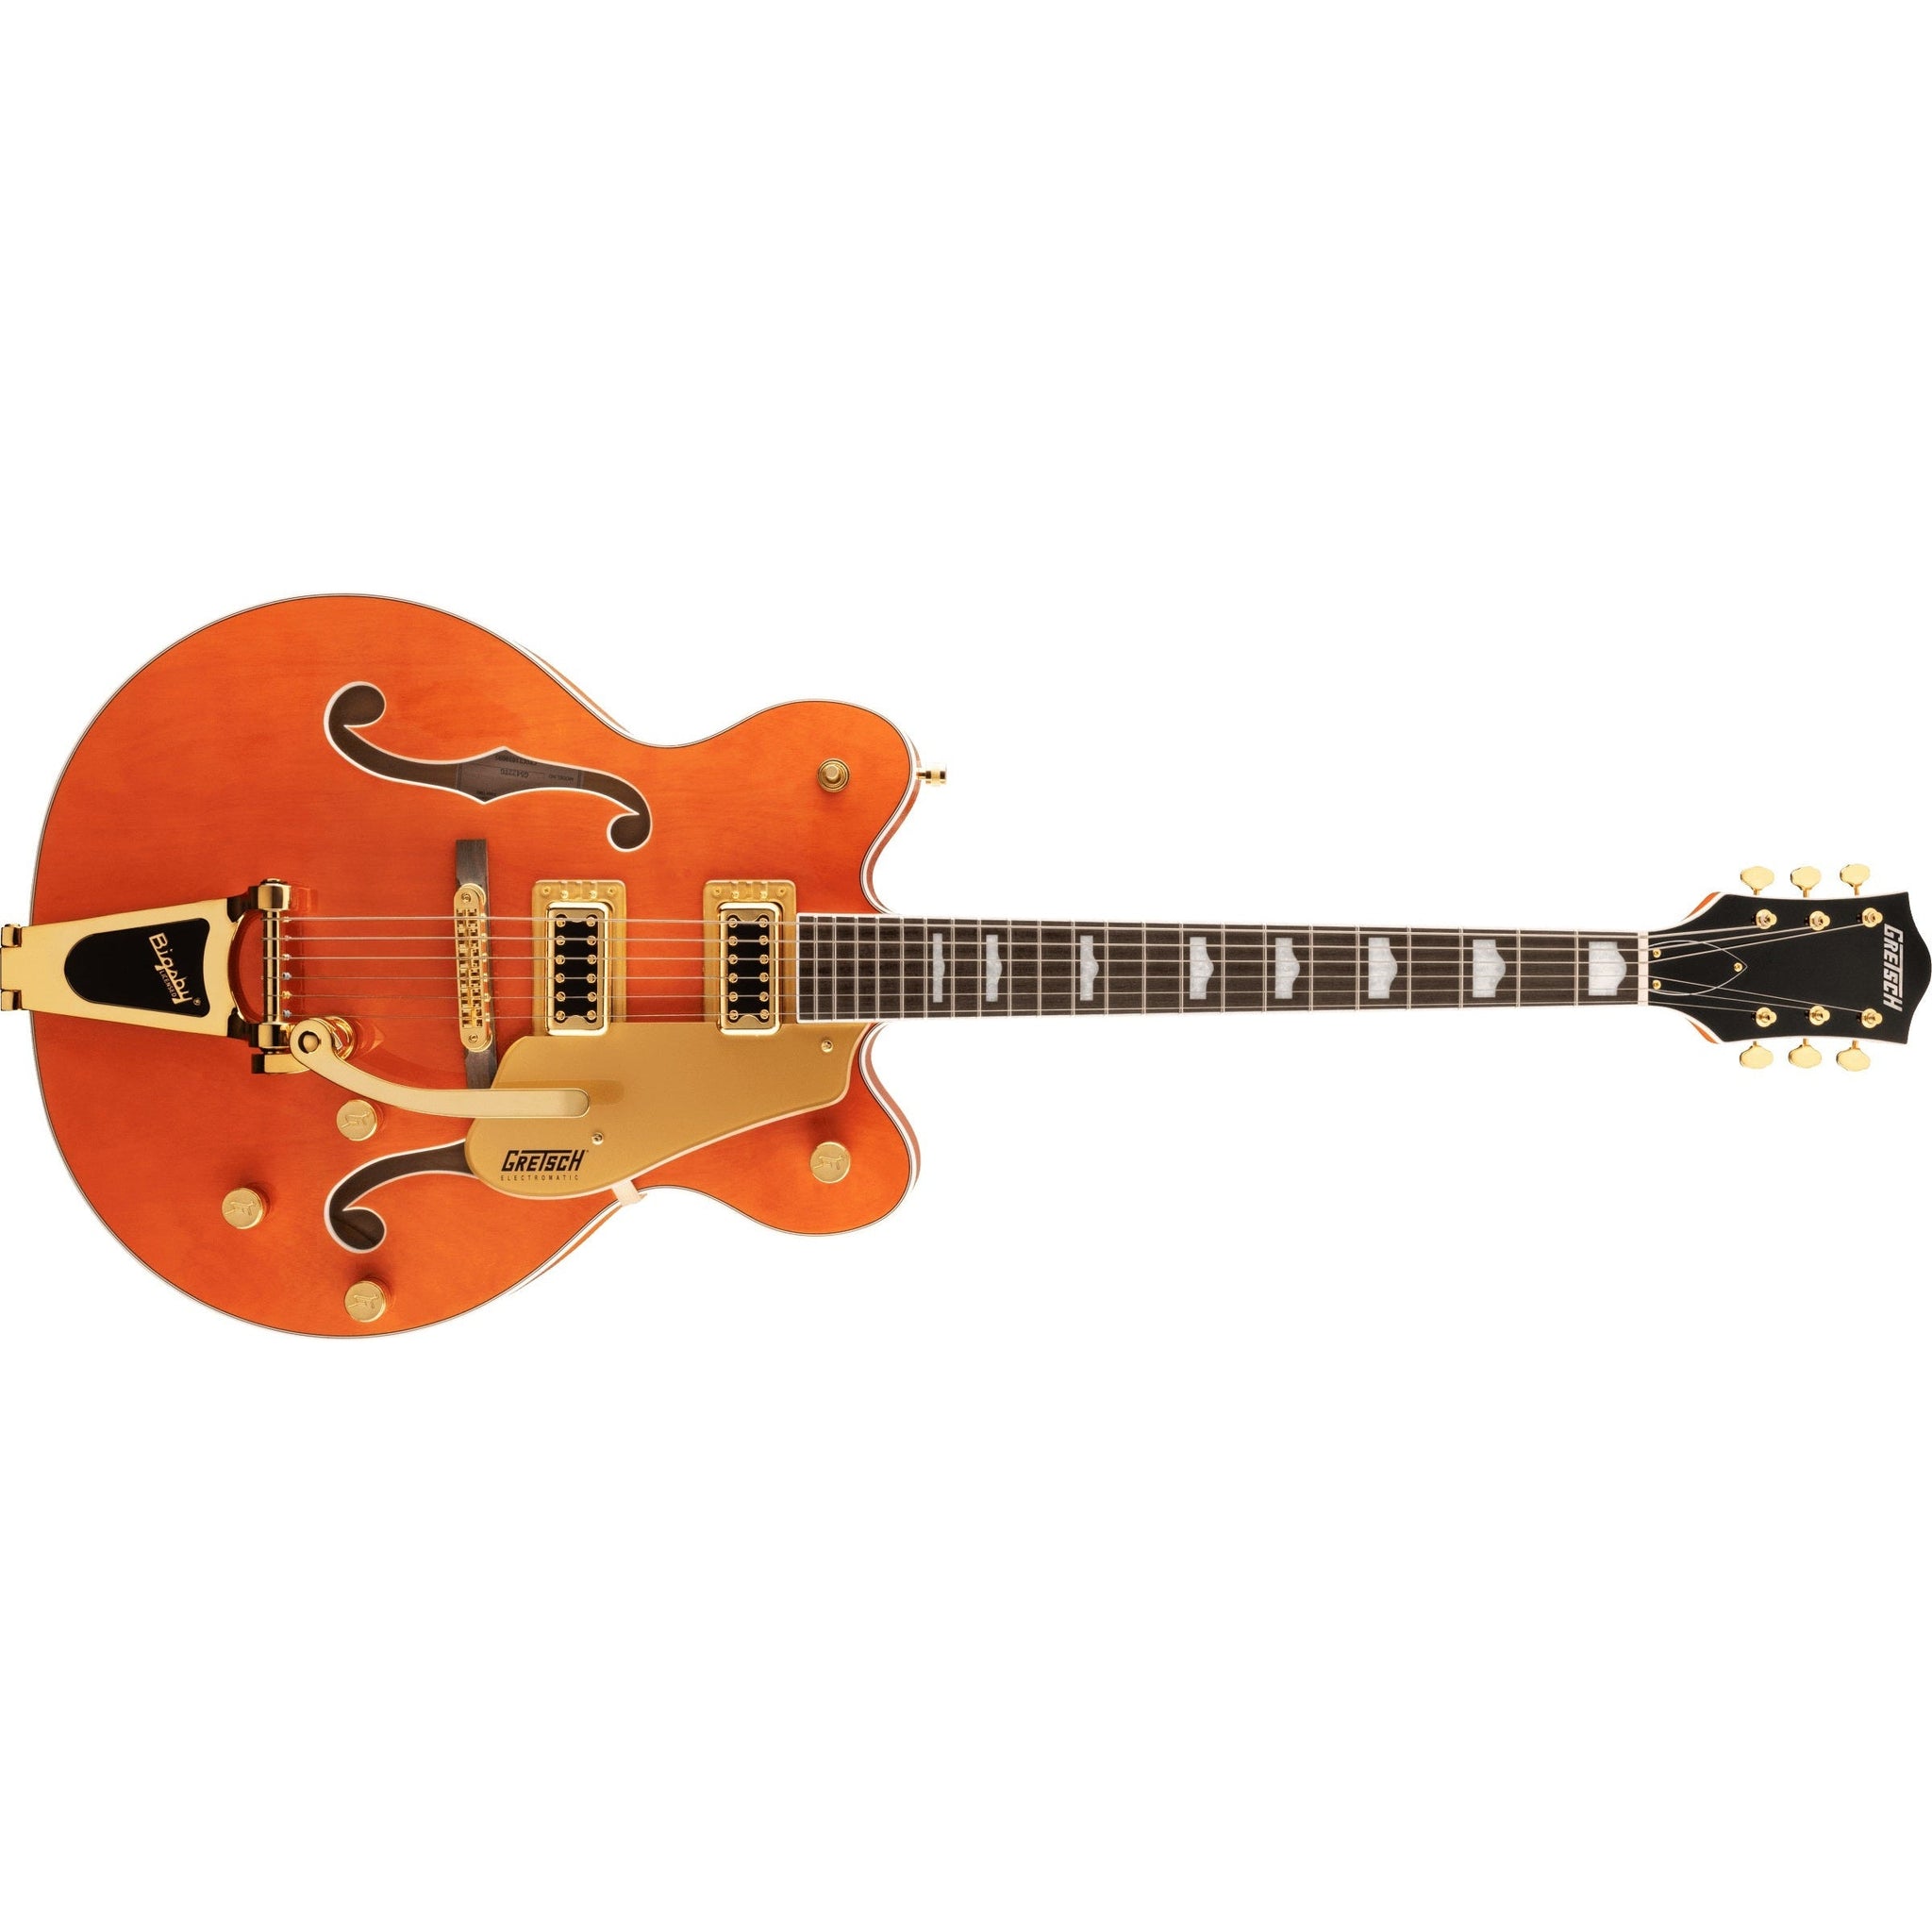 Gretsch G5422TG Electromatic Classic Hollowbody Electric Guitar-Orange Stain-Music World Academy